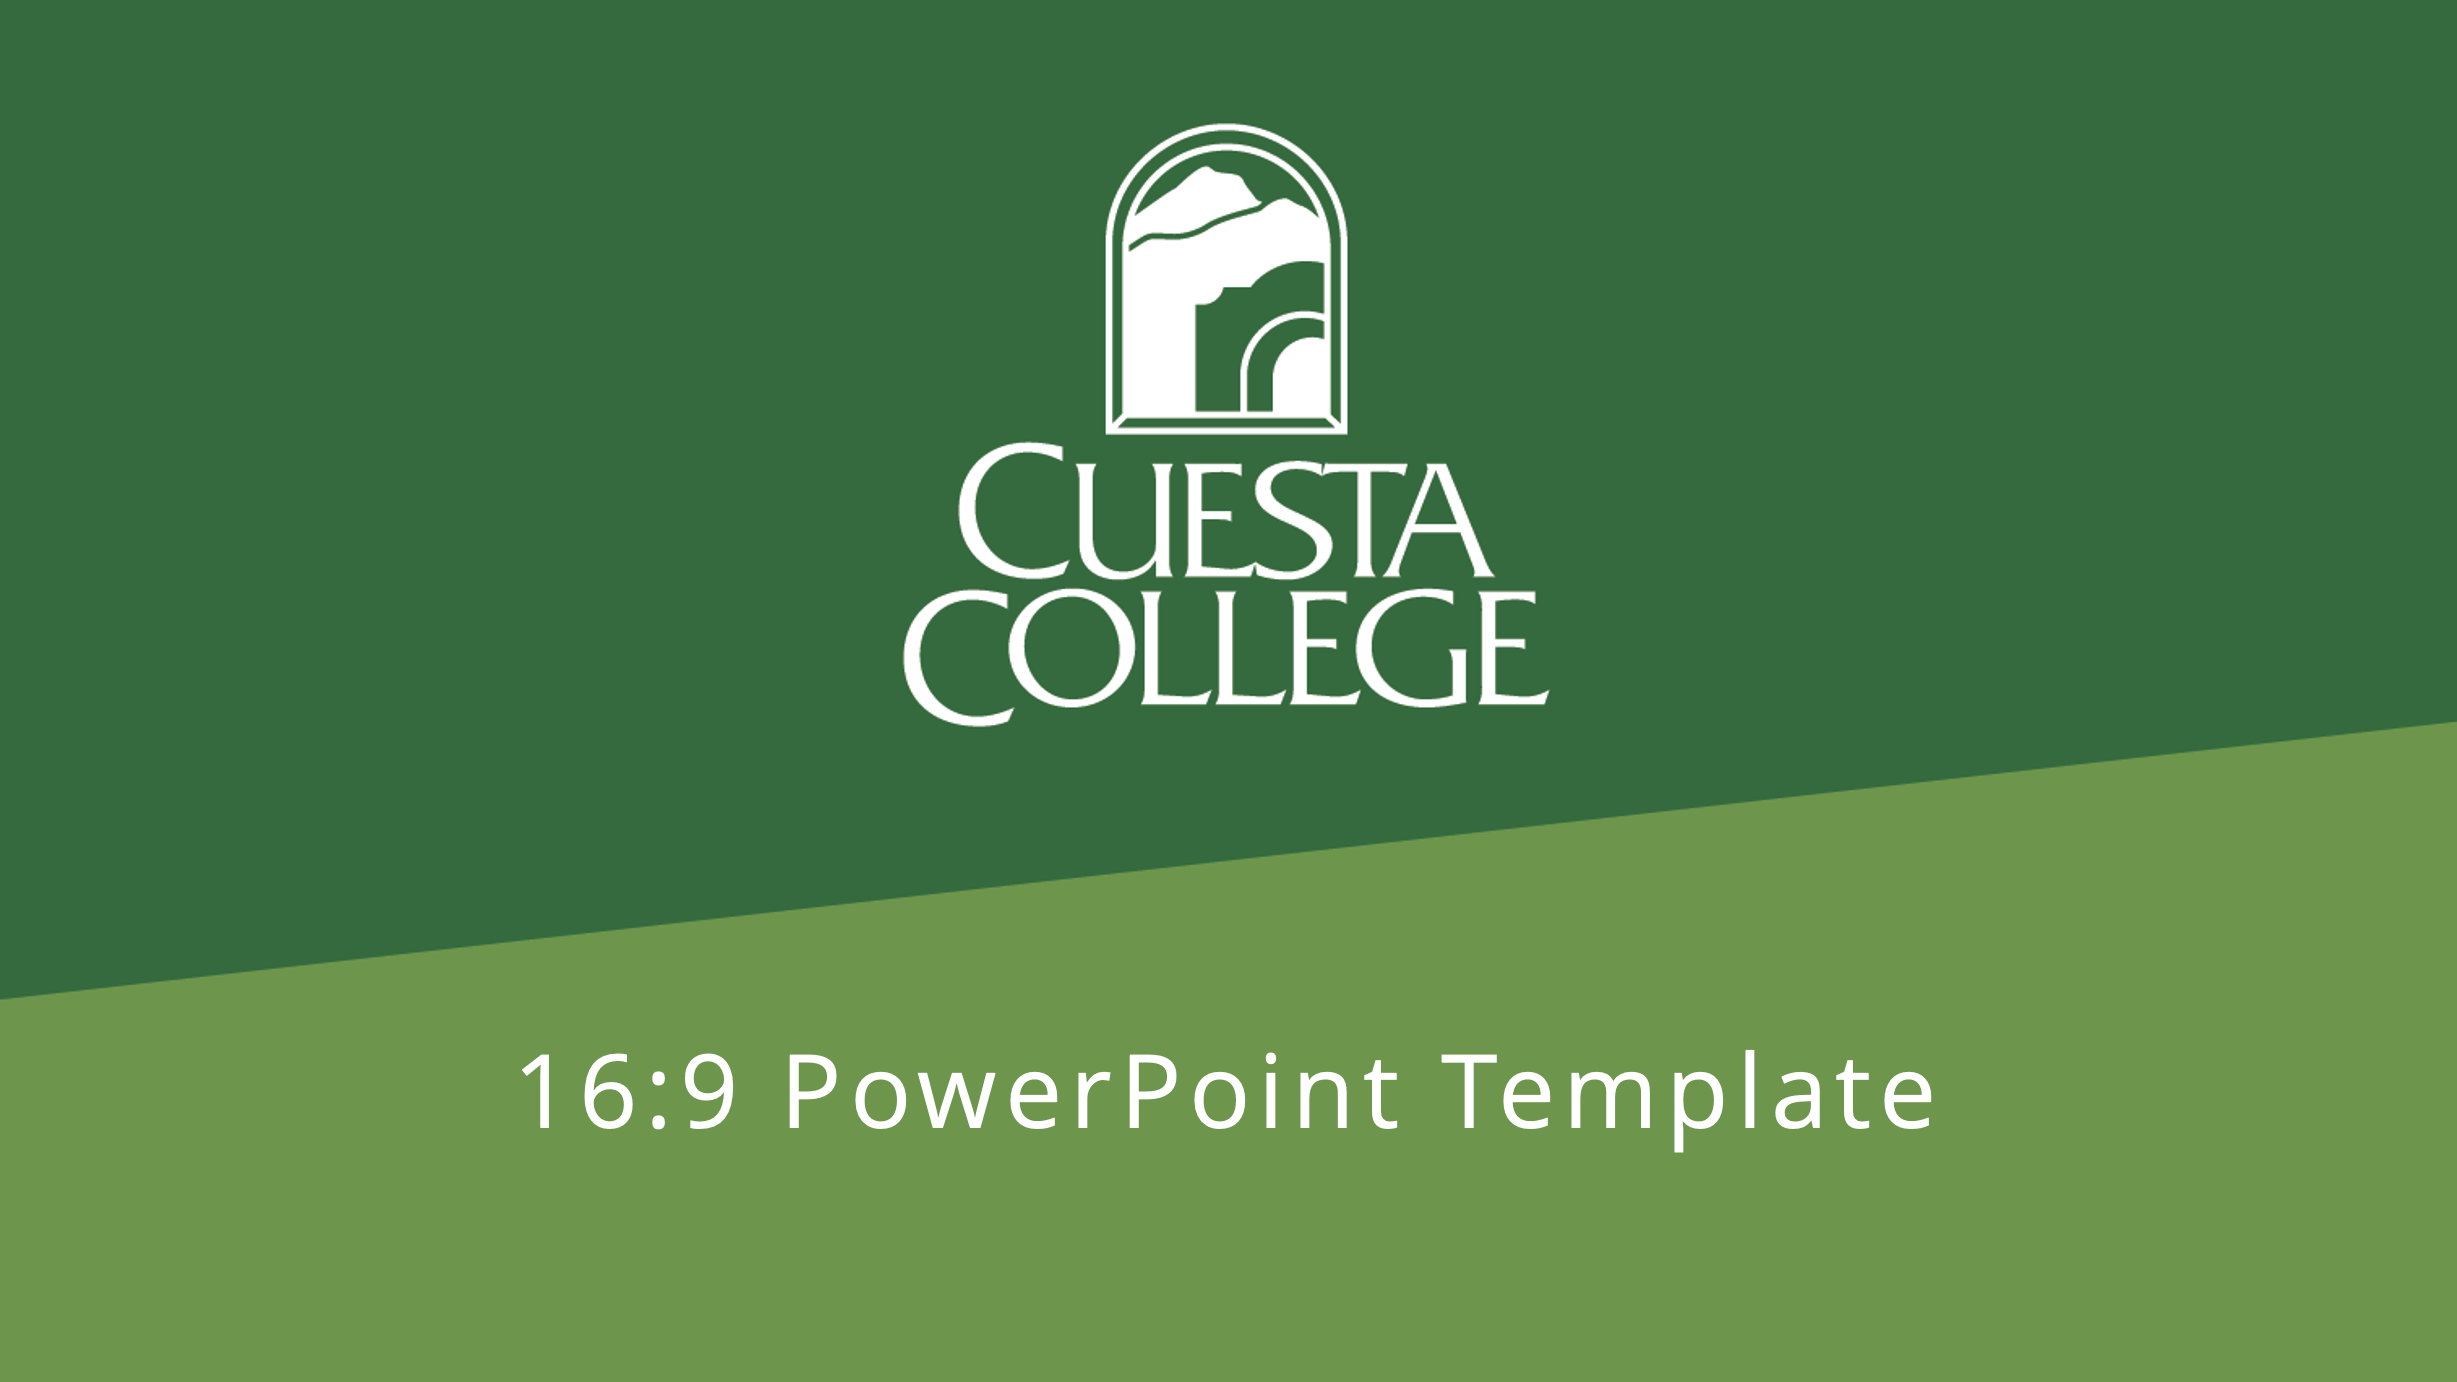 Cuesta College PowerPoint Template